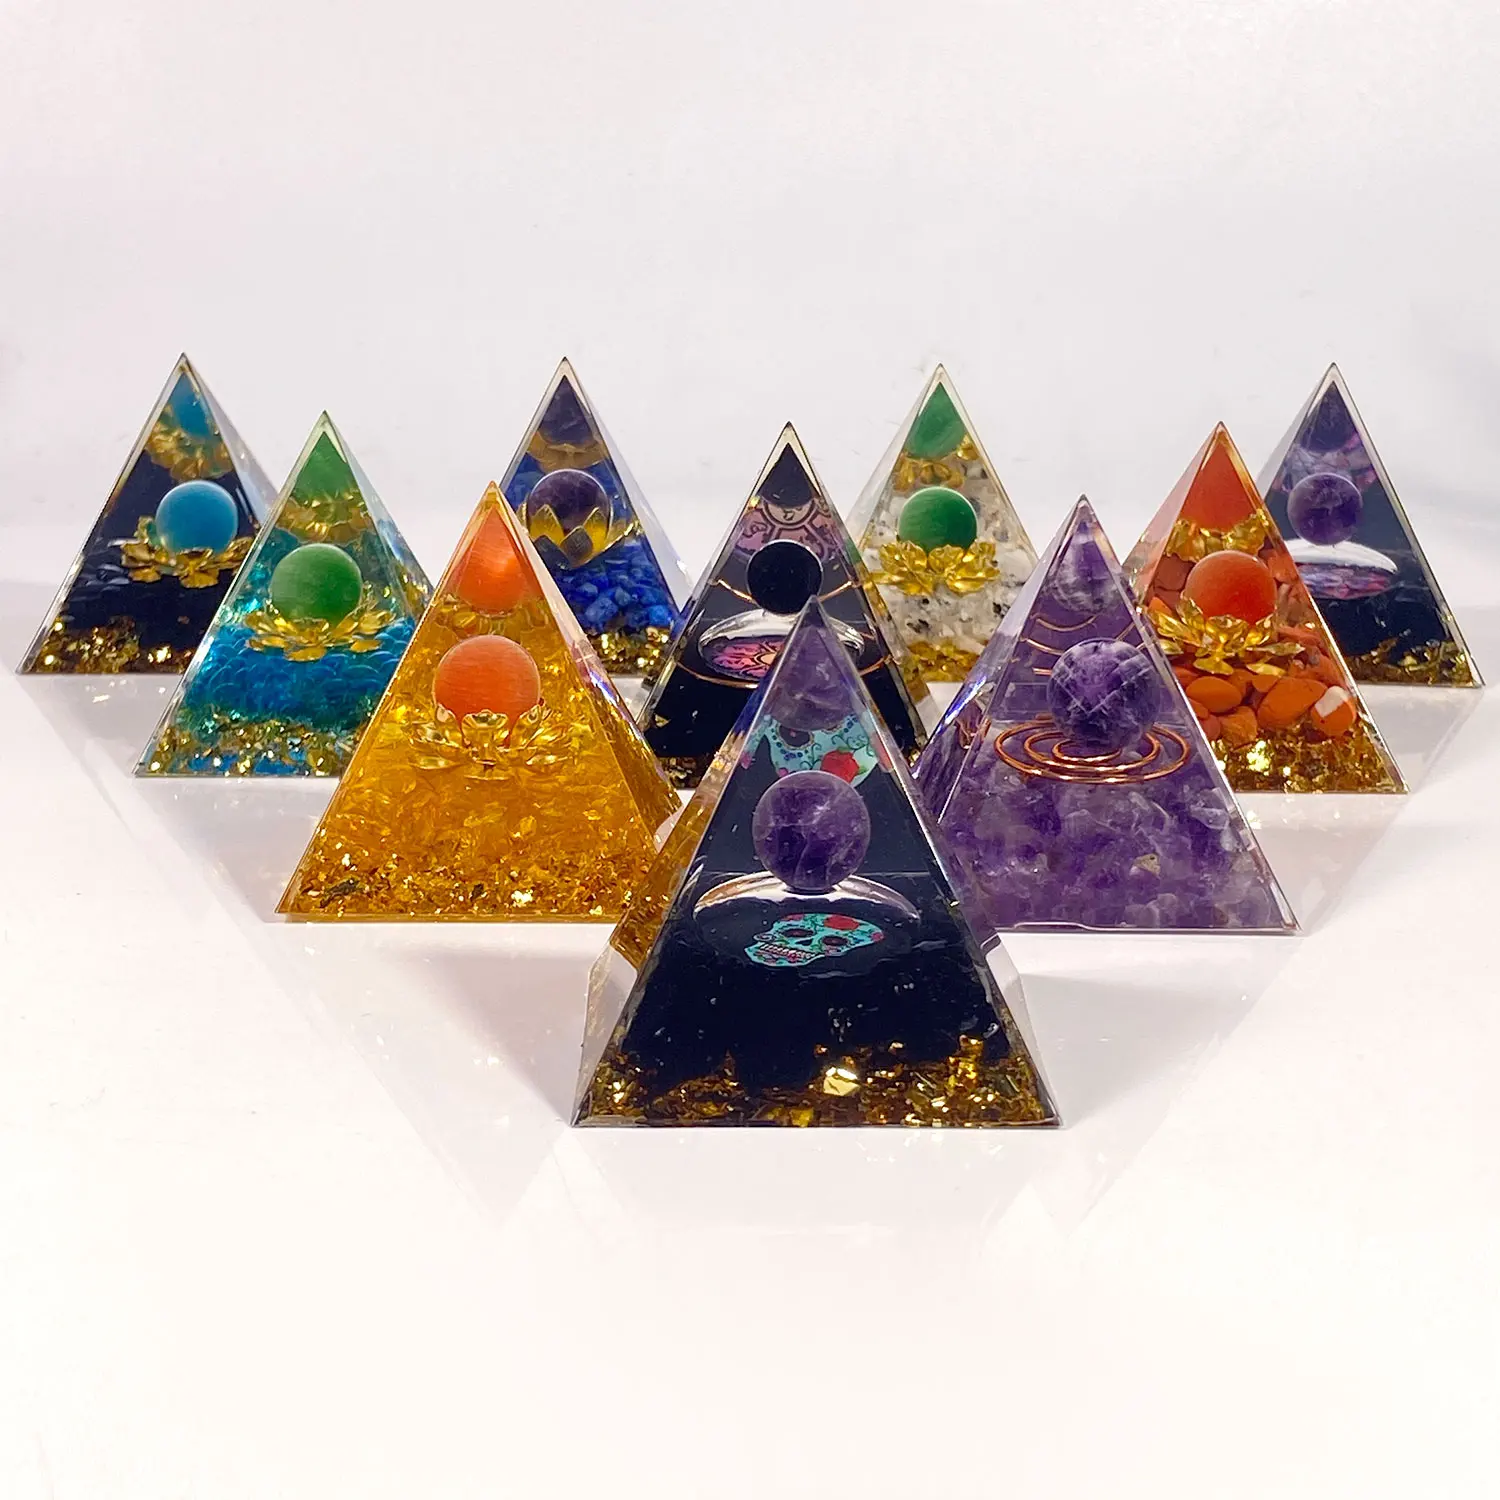 

Tree Of life Natural Quartz Sphere Pyramid Crystals Healing Orgonite Energy Home Decoration